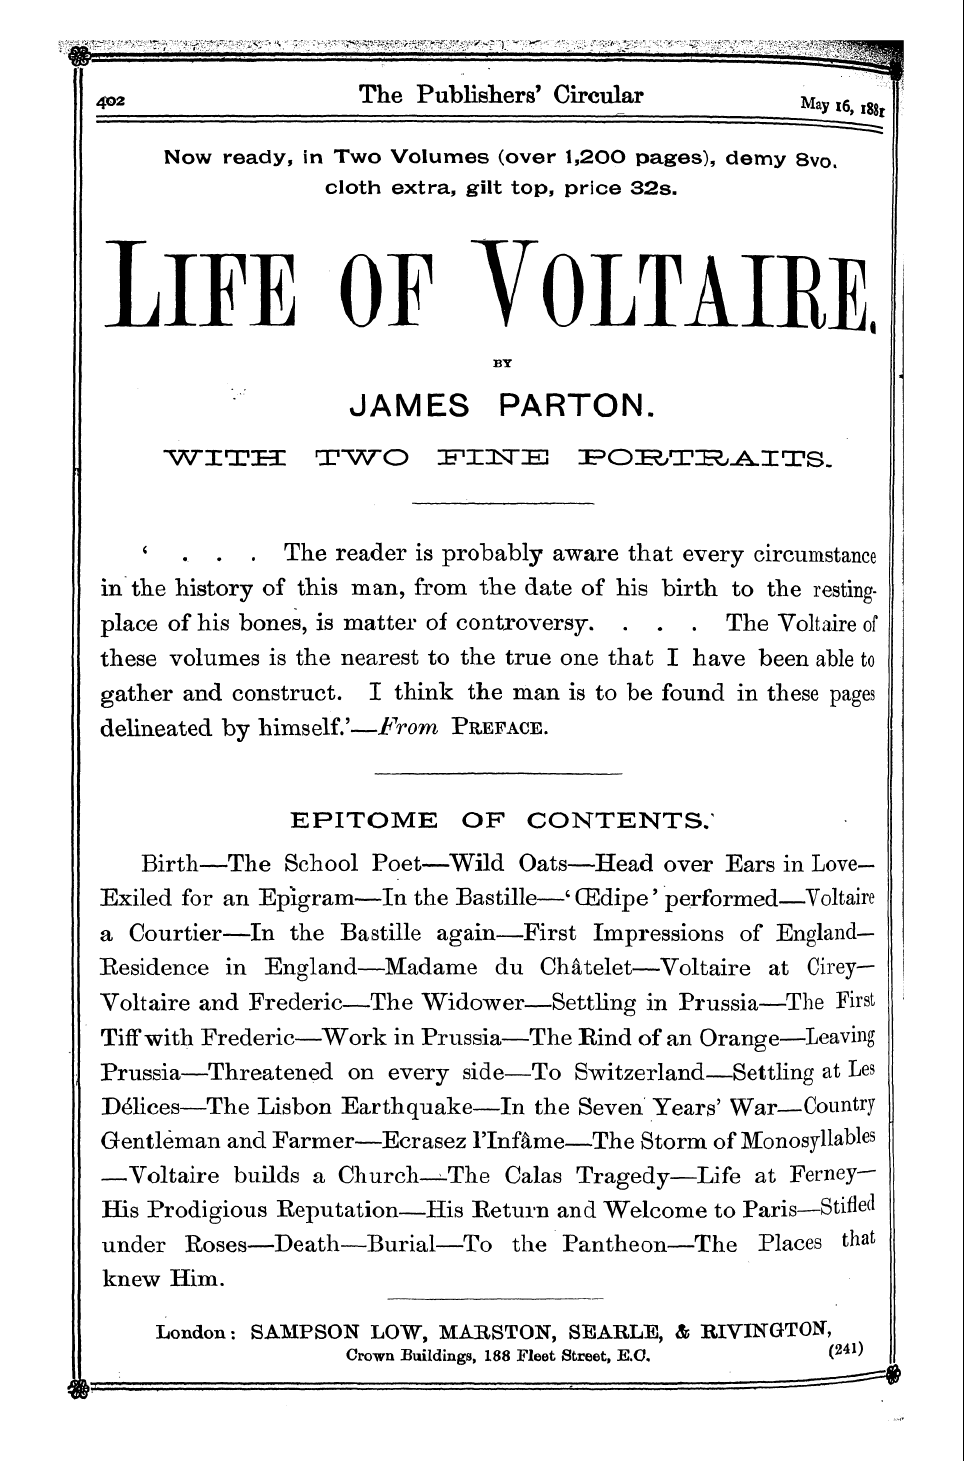 Publishers’ Circular (1880-1890): jS F Y, 1st edition: 18